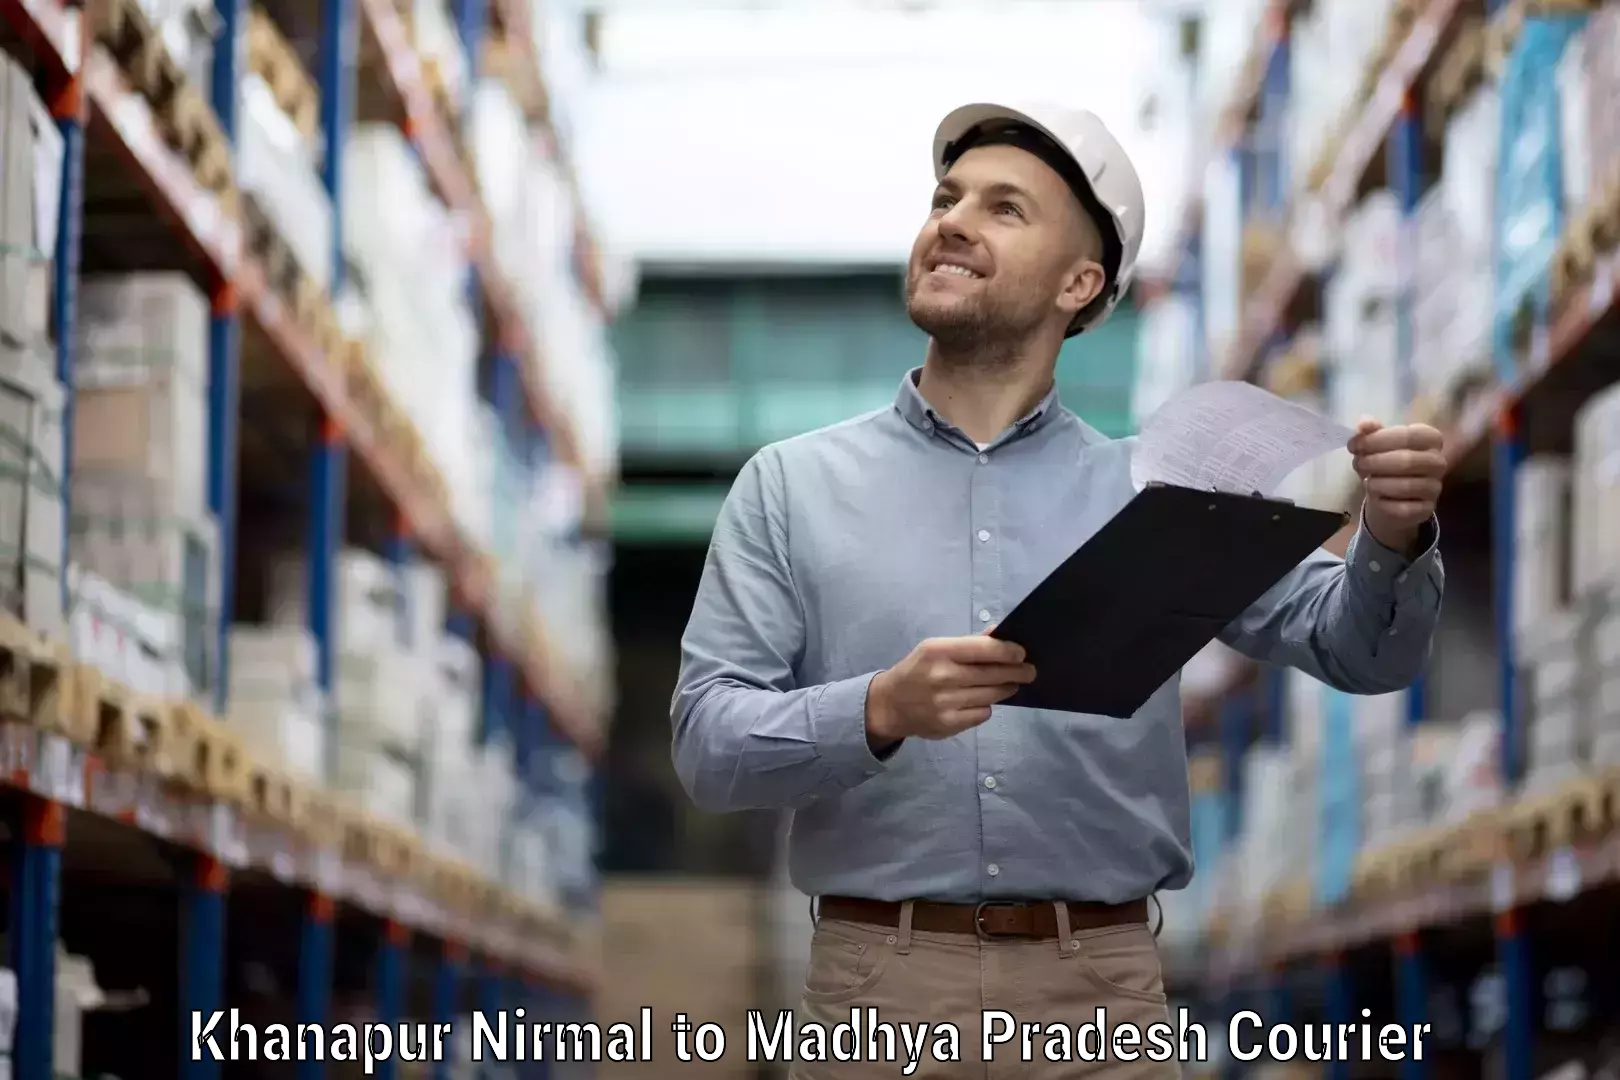 Professional courier handling Khanapur Nirmal to Mandideep